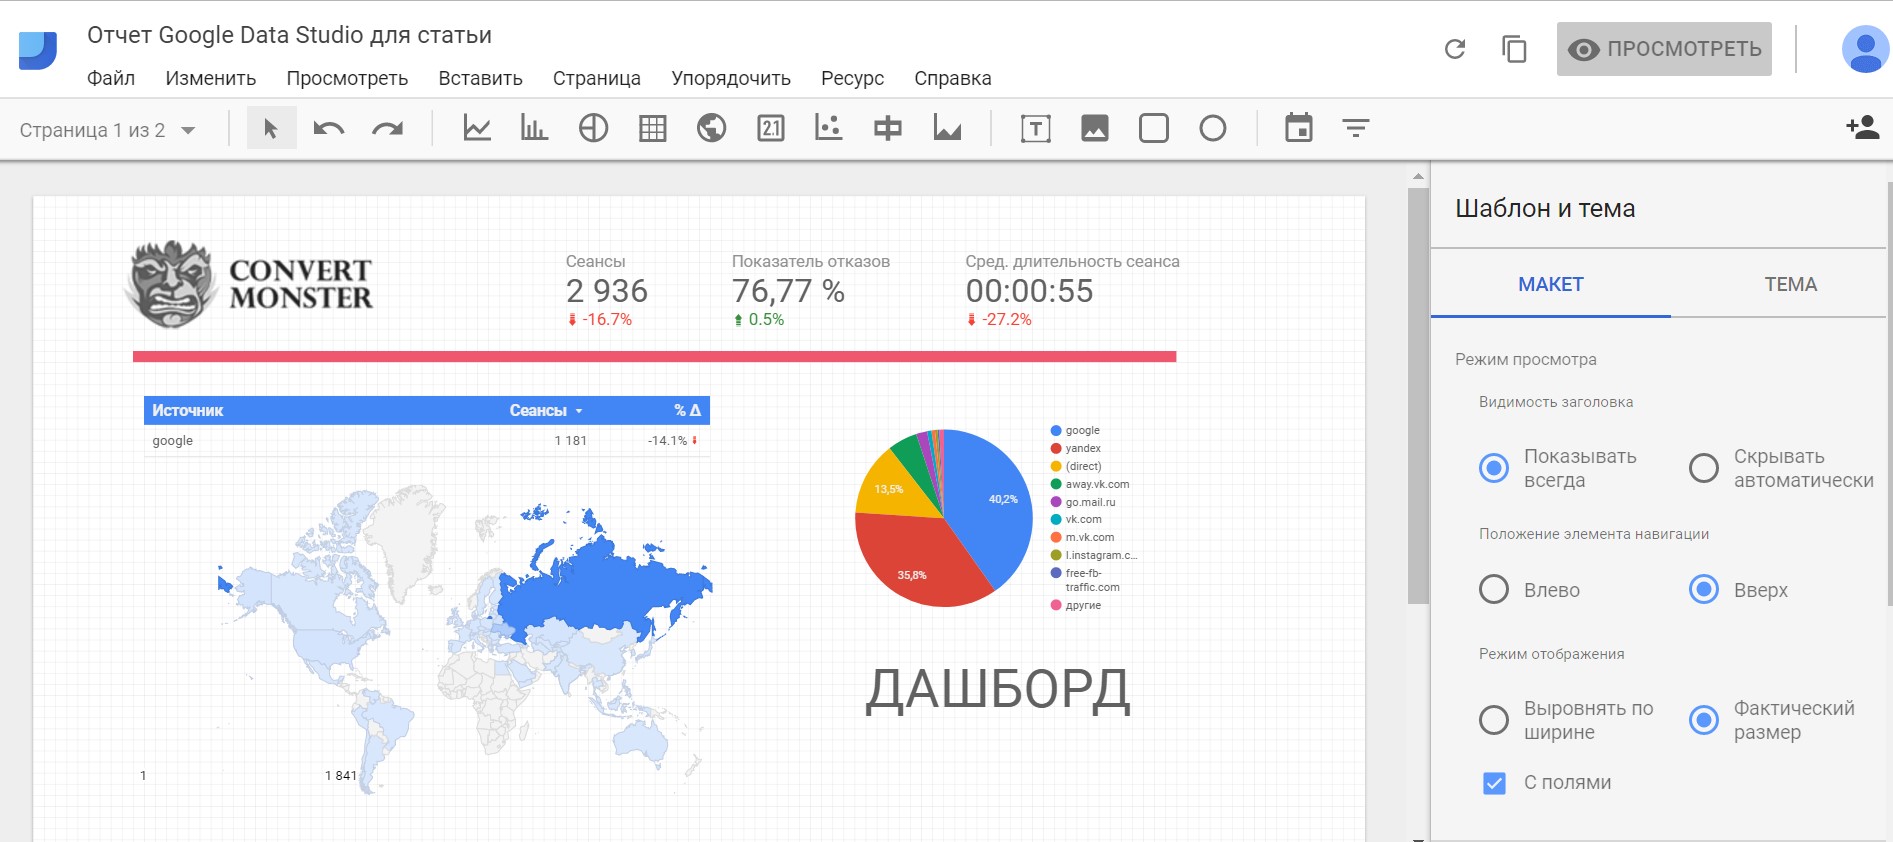 Отчет в Google Data Studio